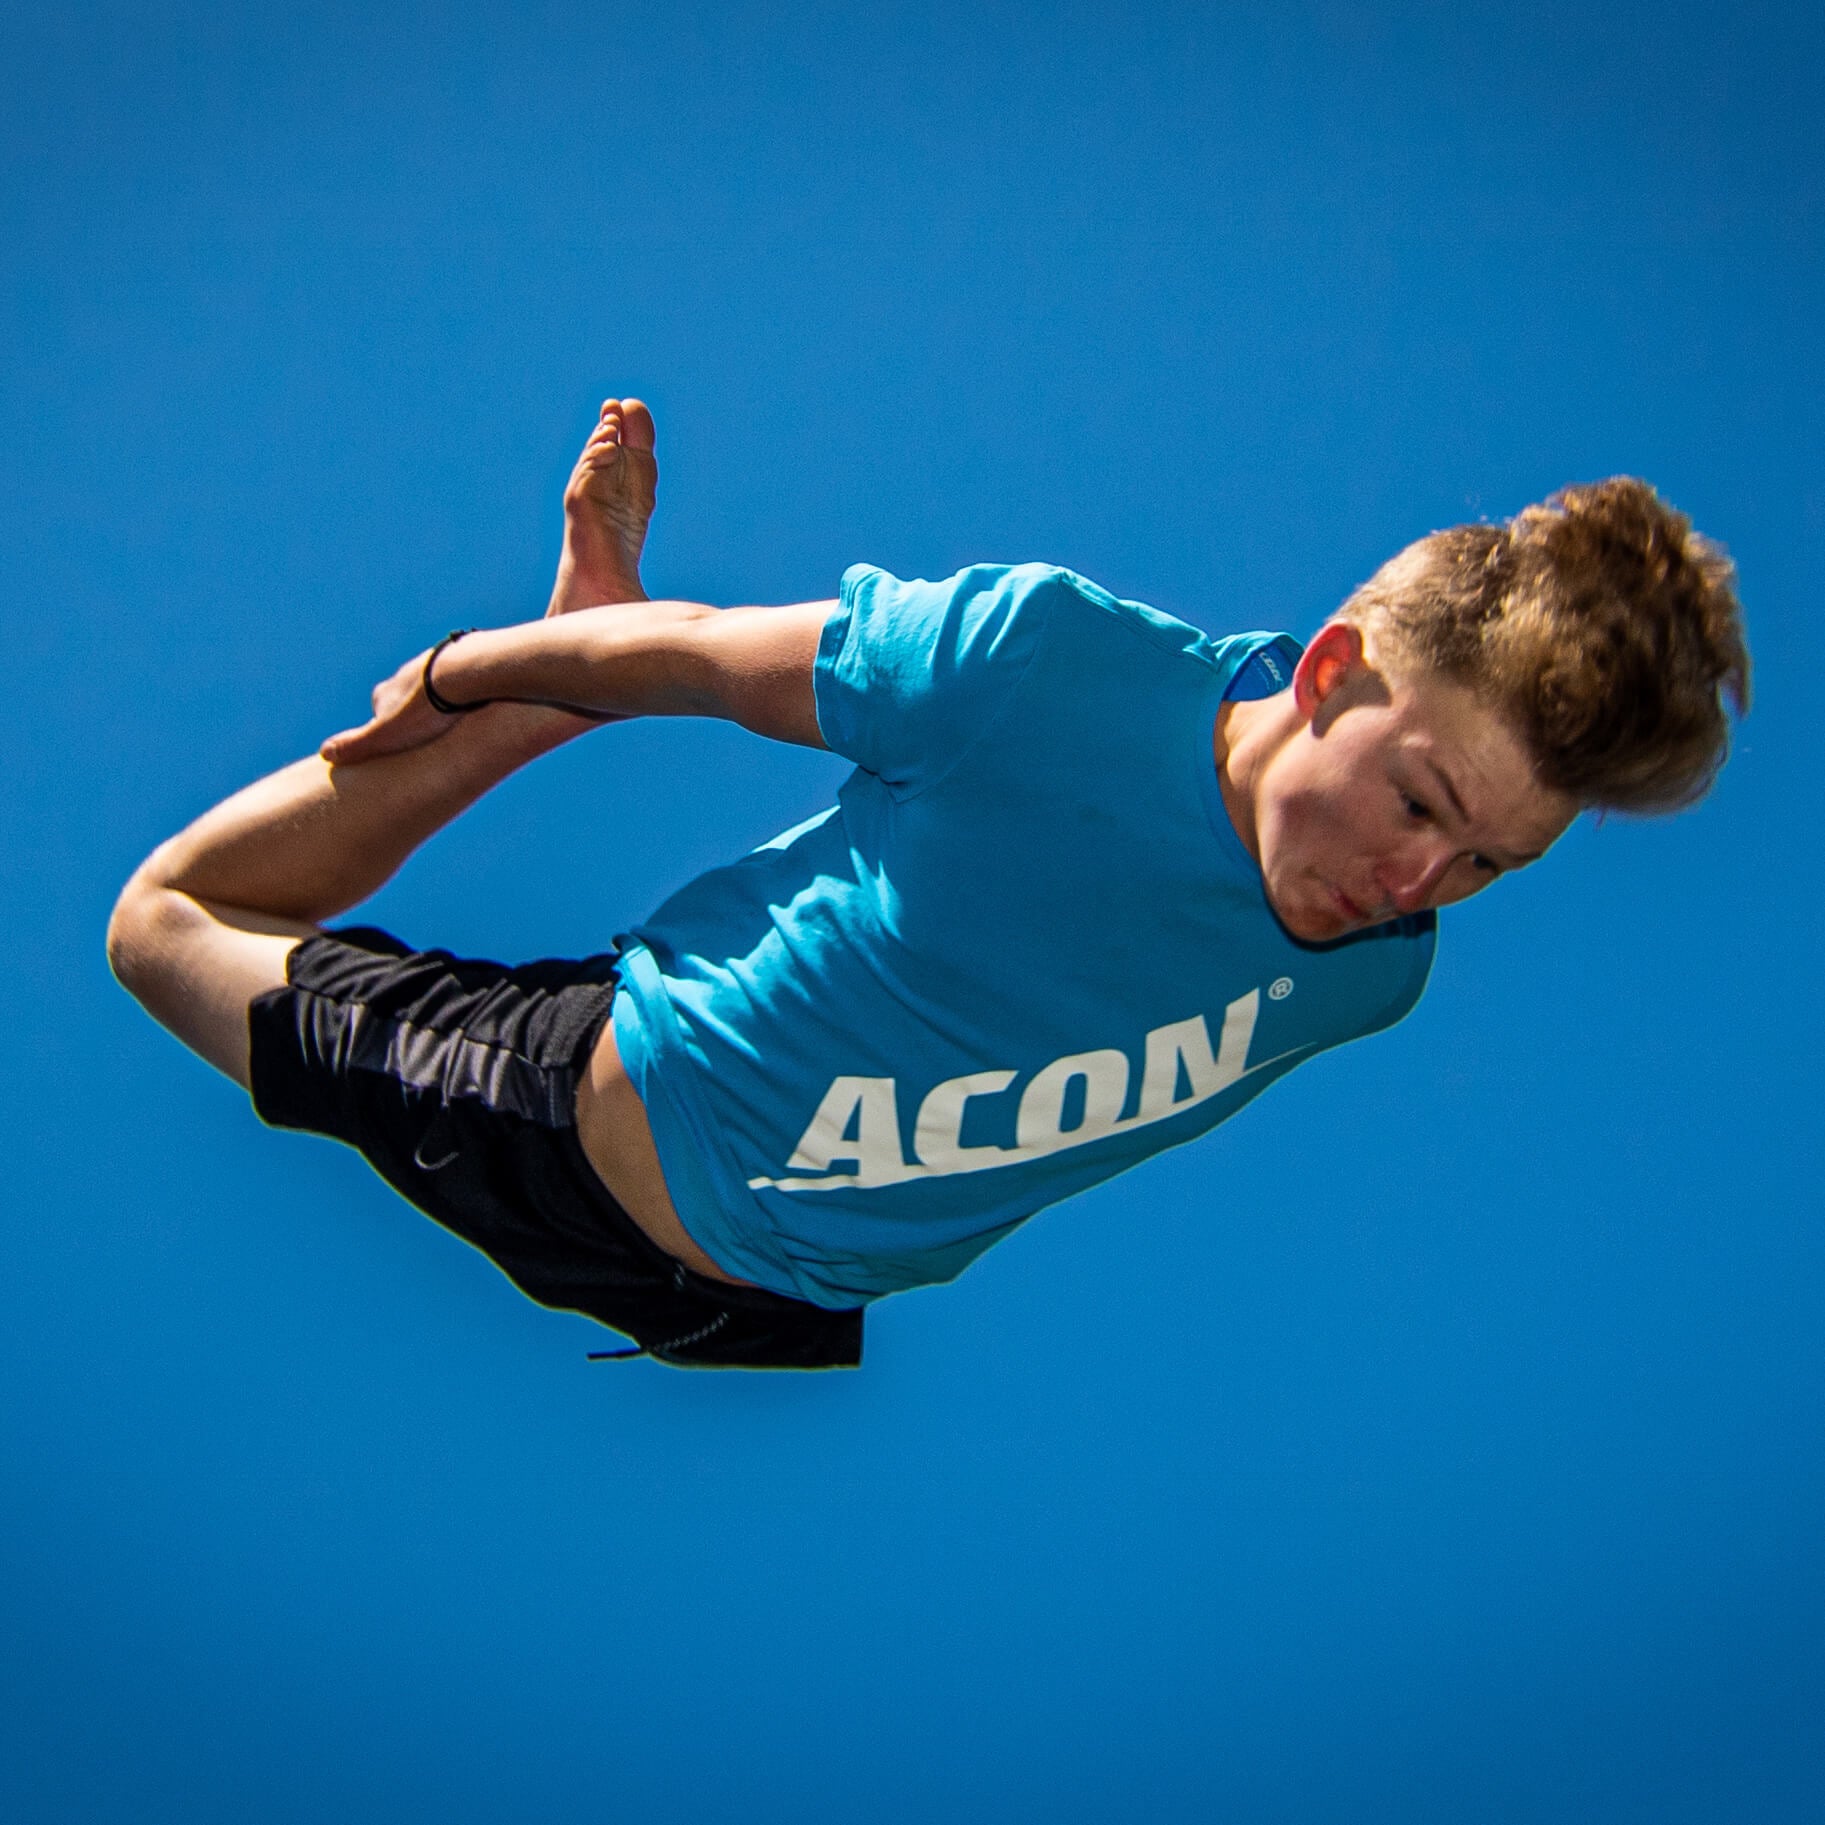 A boy in a blue acon t-shirt doing a trampoline jump.